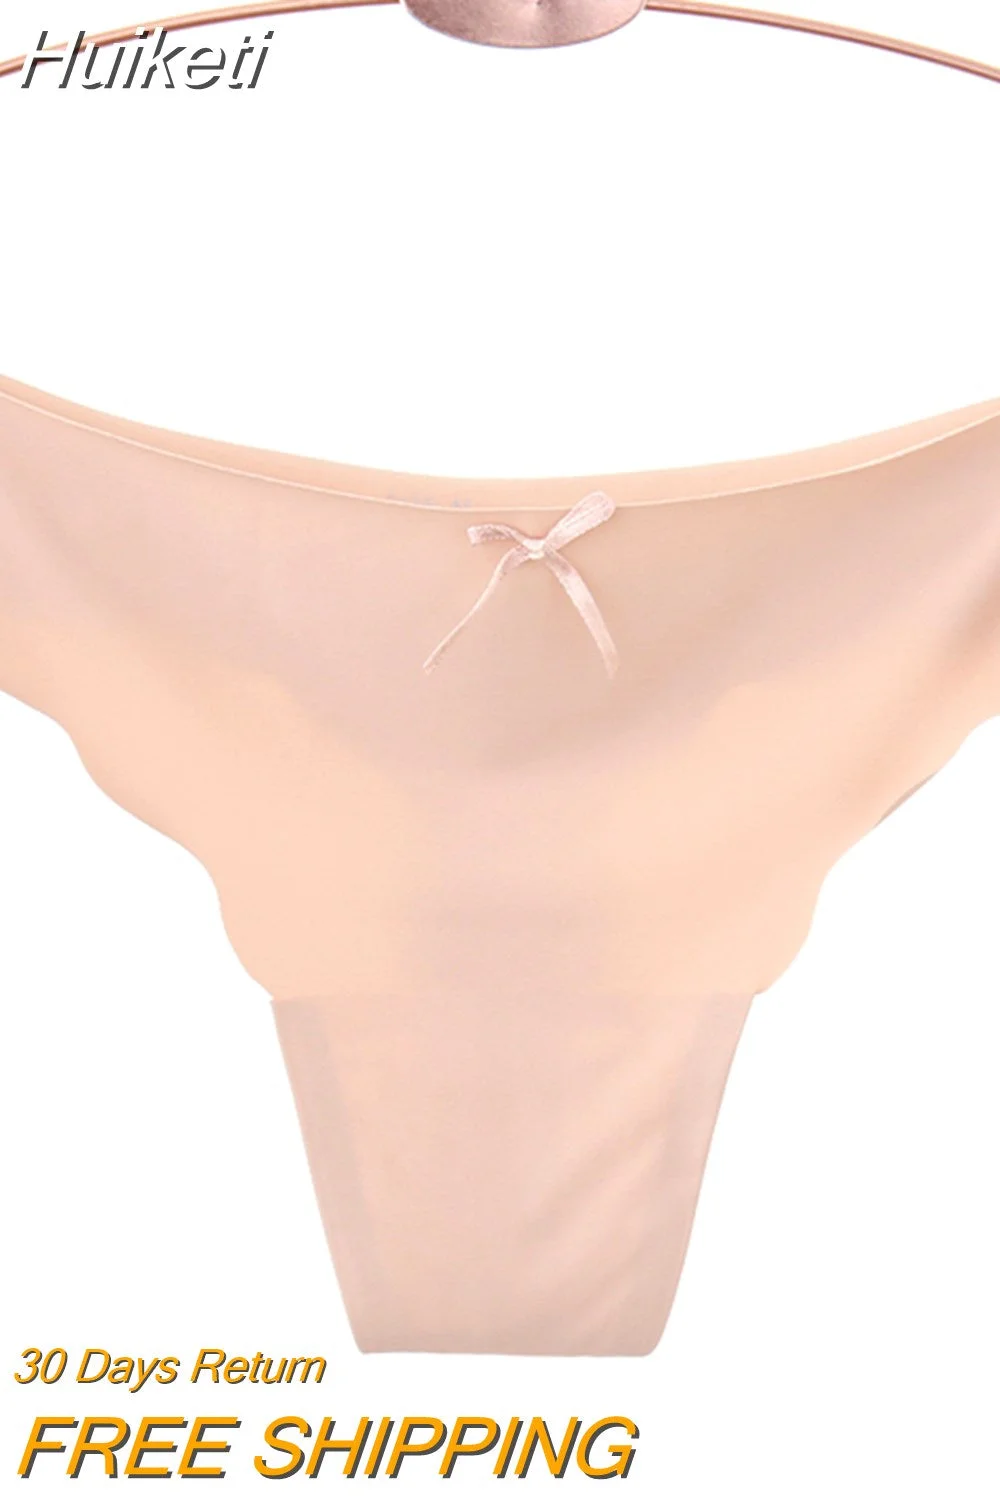 Huiketi Tangas Seamless Panties G-String Thongs Underwear Women Spandex Underpants Low Rise Ice Silk M L XL Undershorts